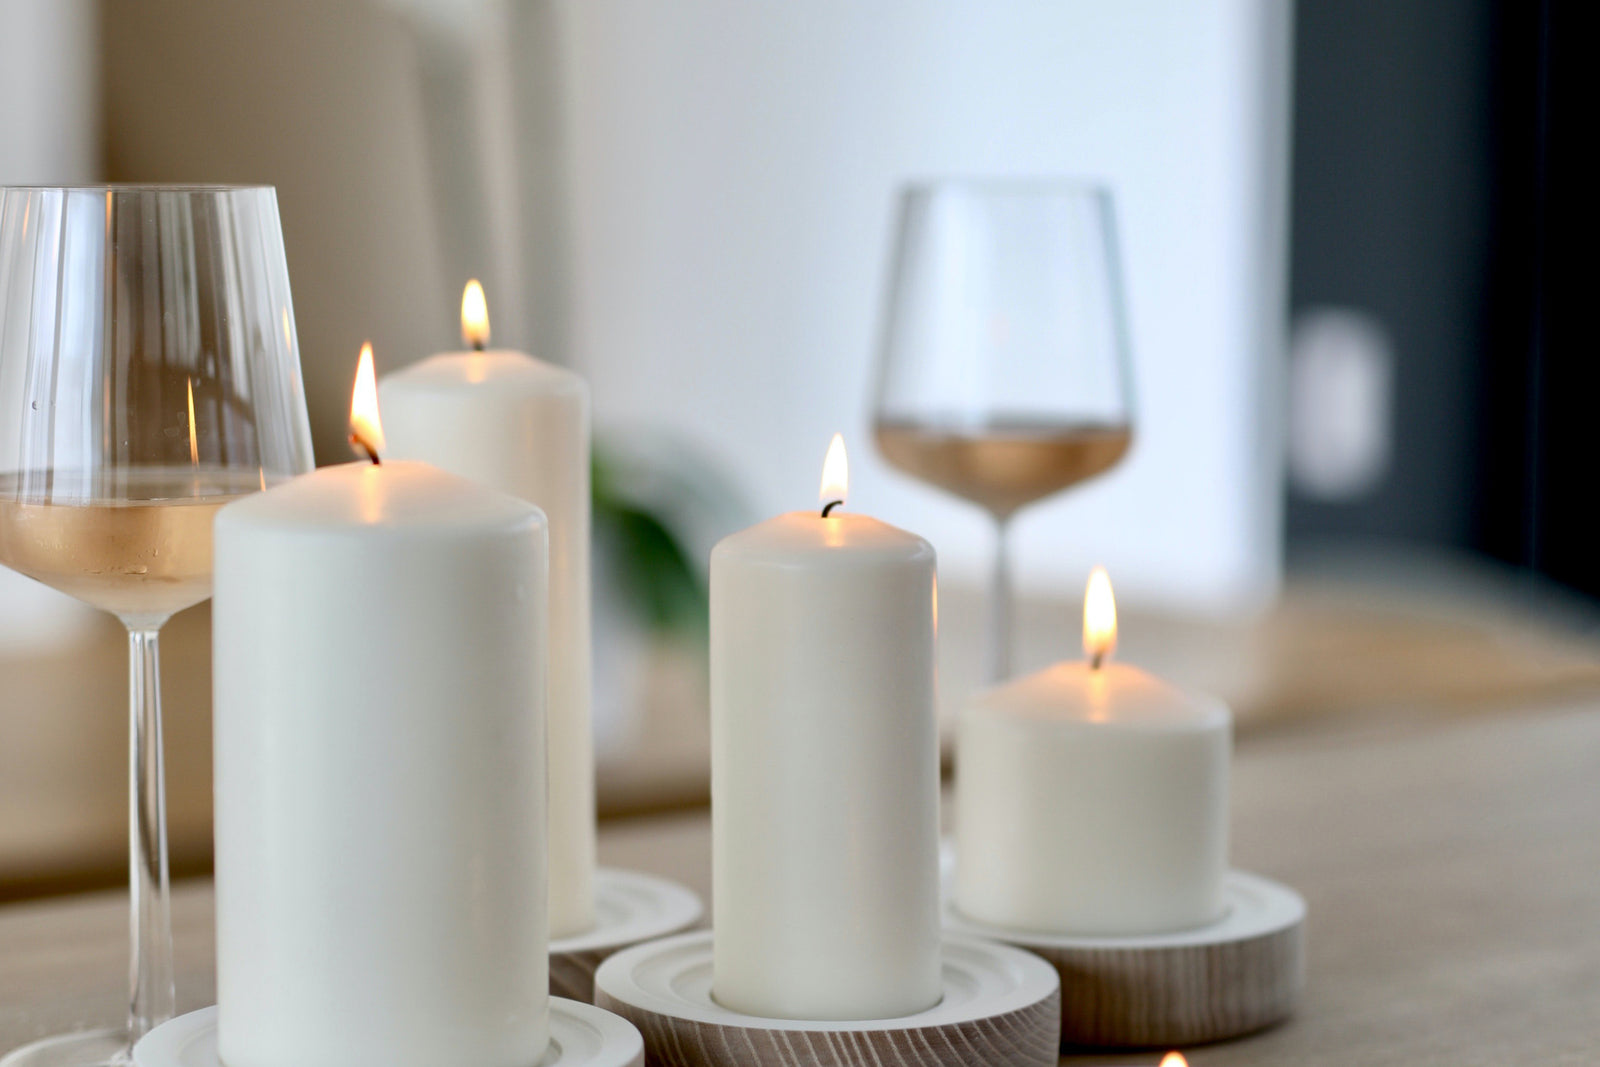 How Do Candles Affect Home Air Quality?